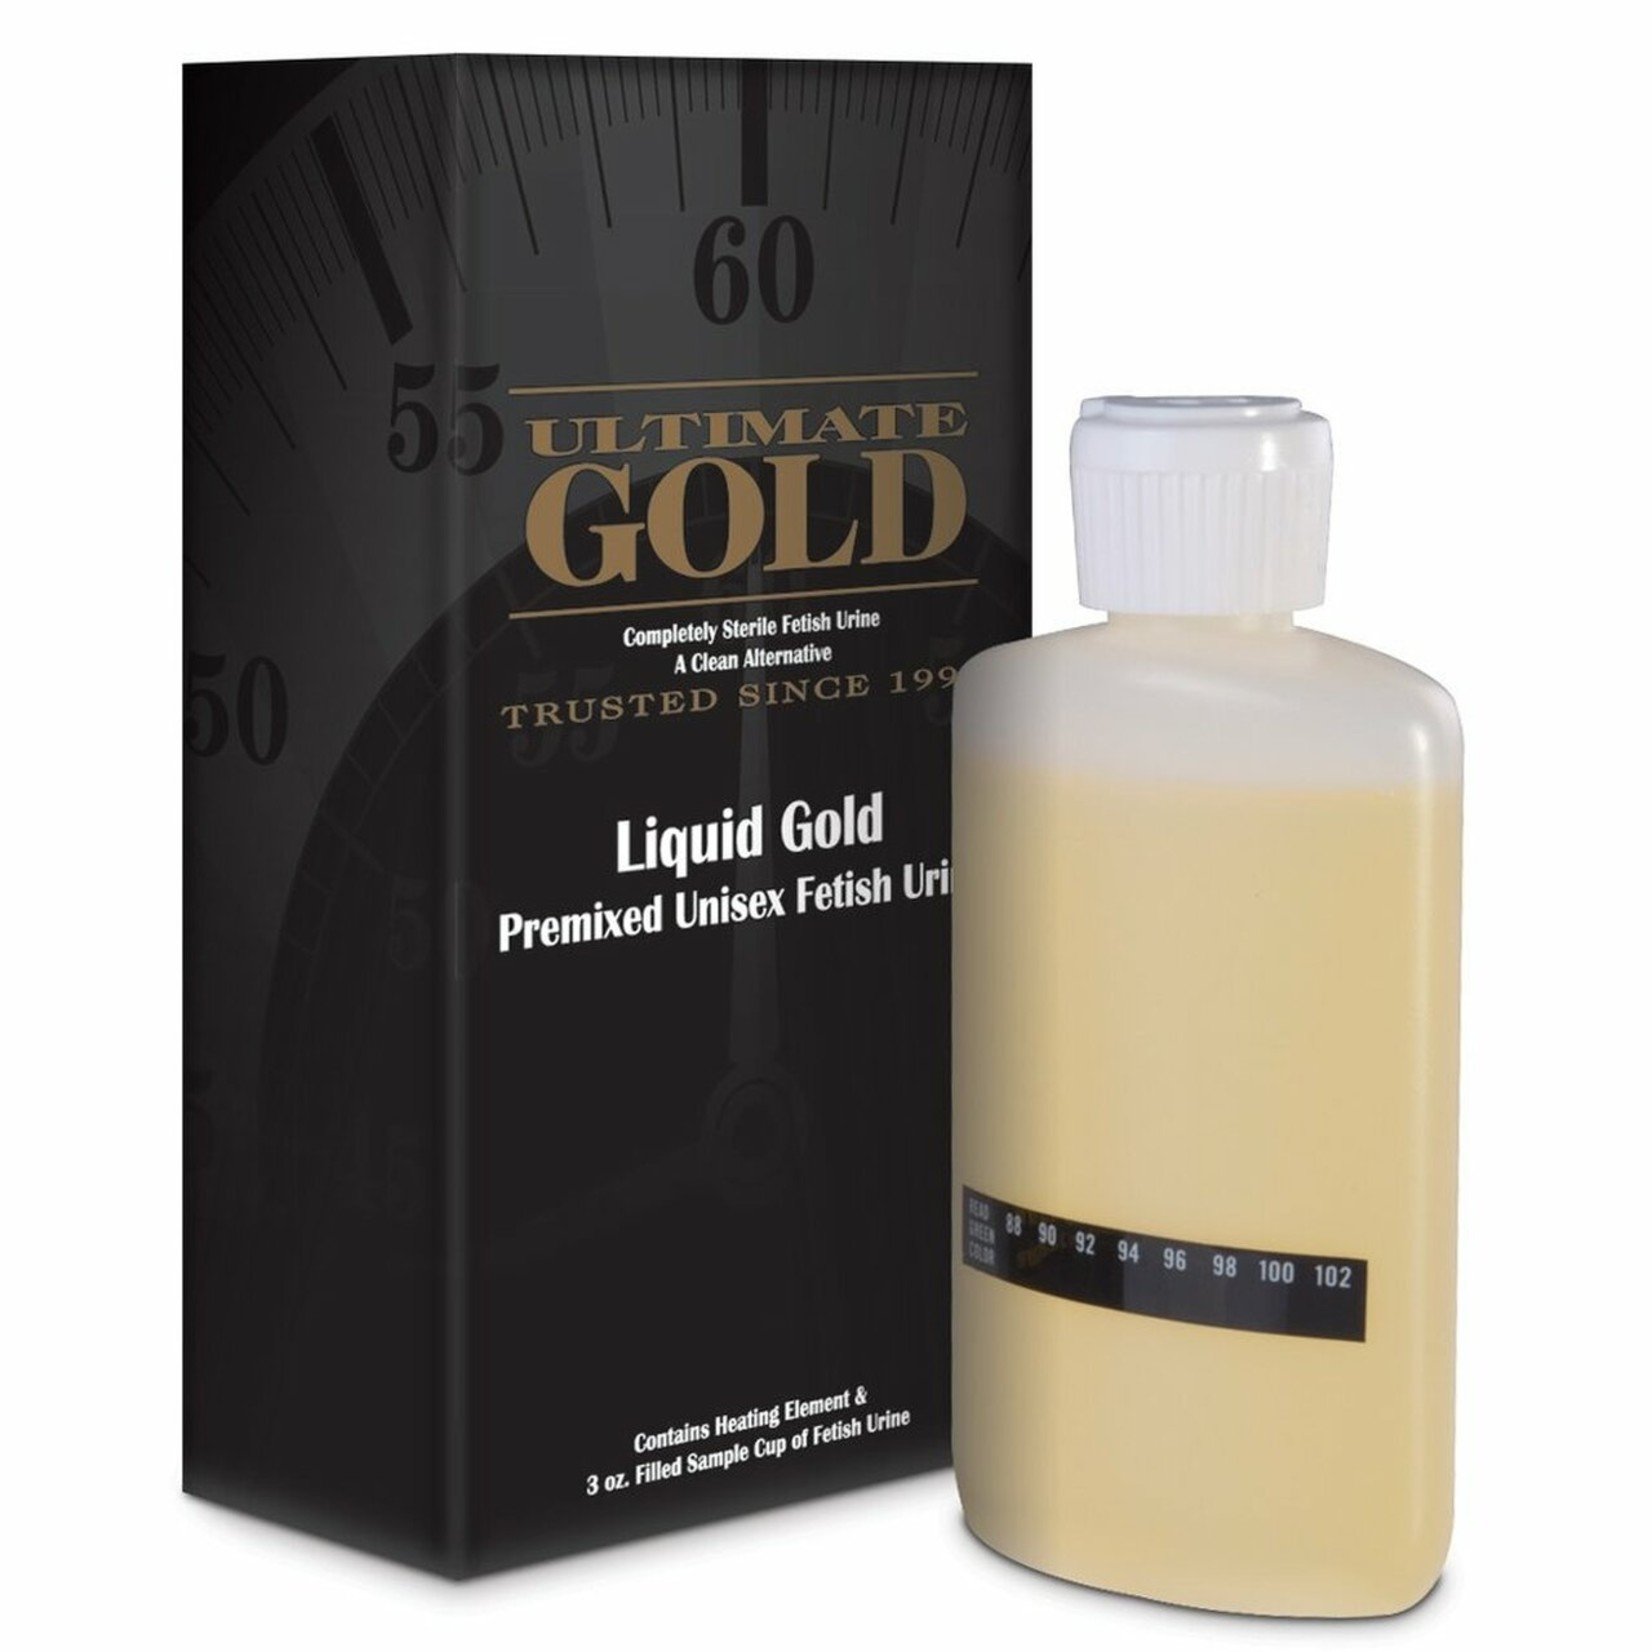 Ultimate gold Ultimate Gold Liquid Gold Fetish Urine